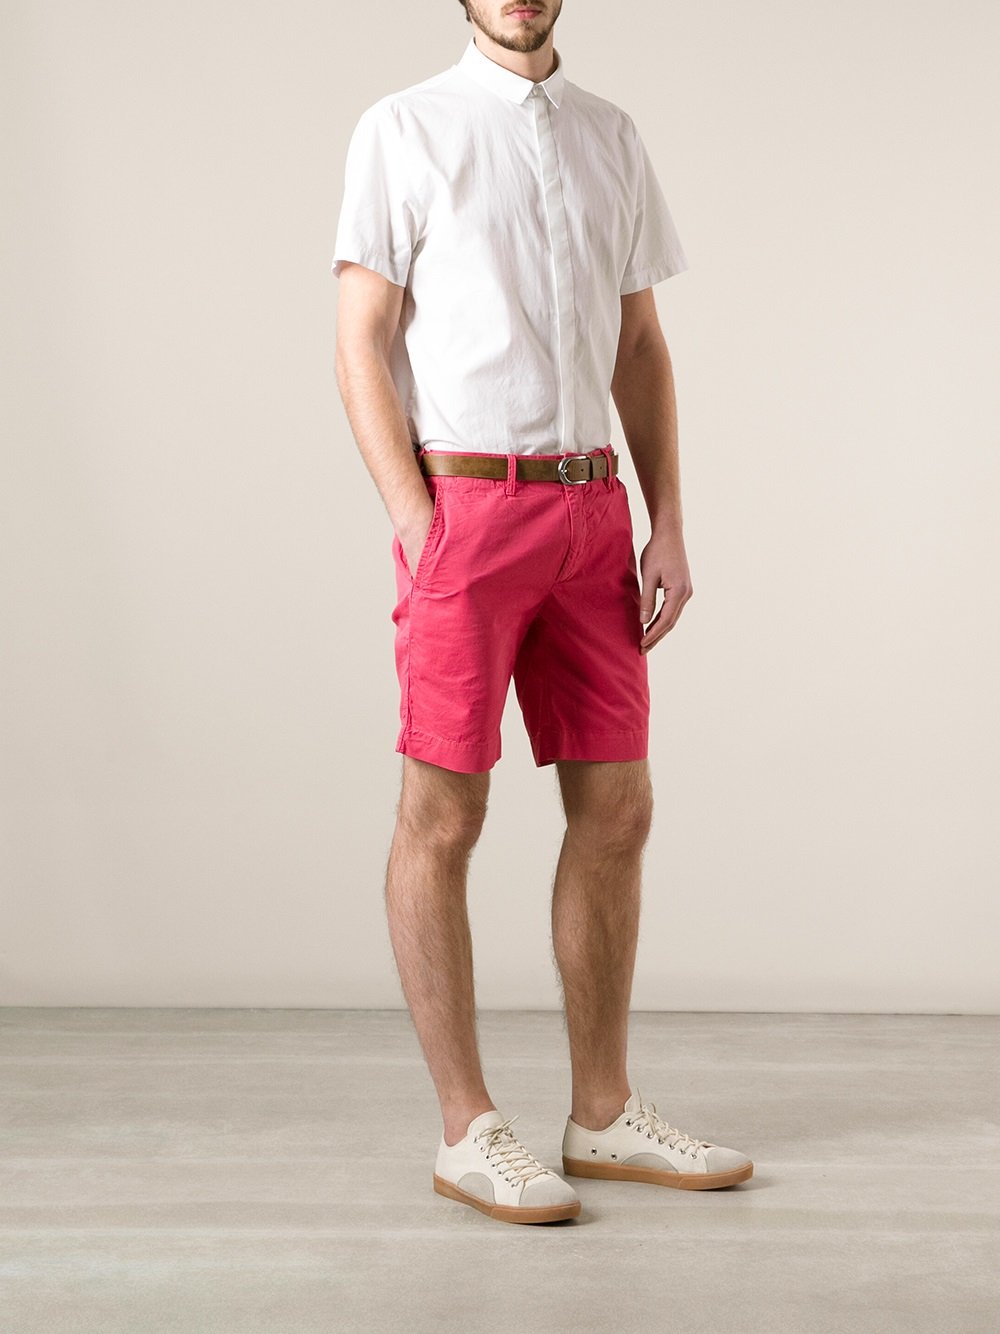 Lyst - Polo Ralph Lauren Classic Bermuda Shorts in Pink for Men